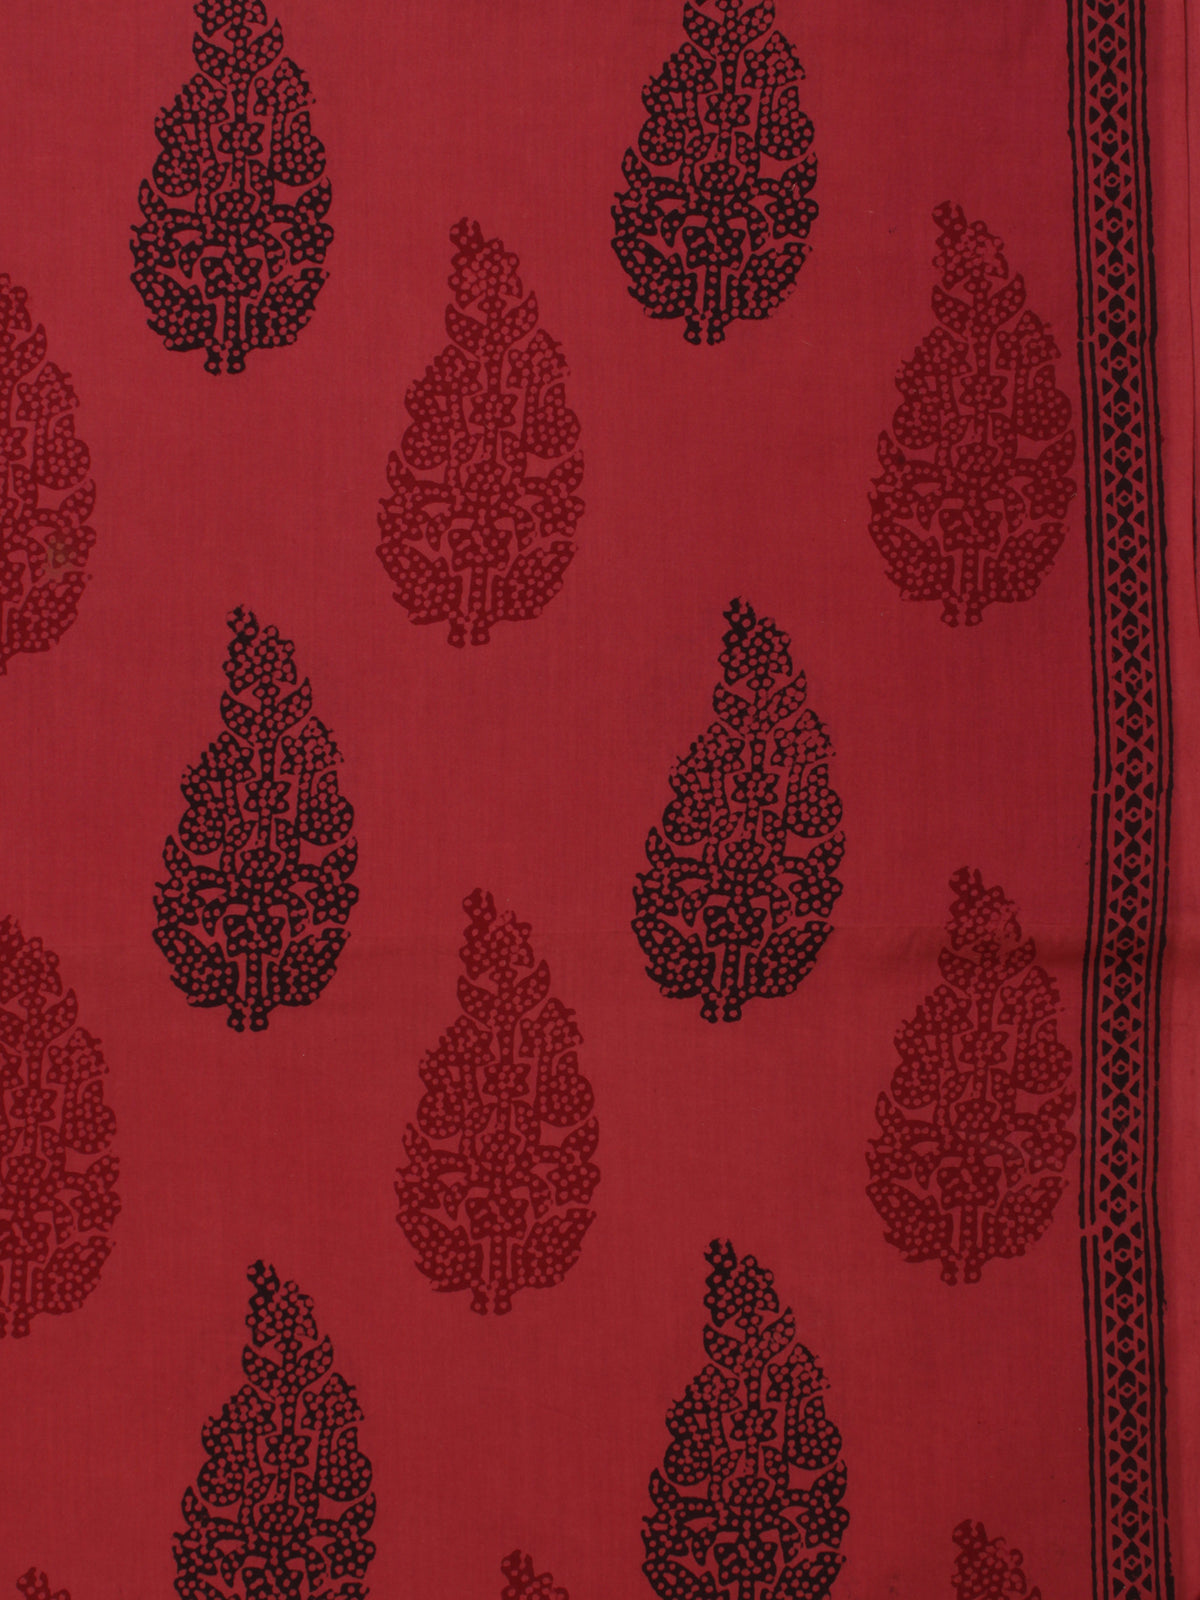 Magenta Pink Red Black Bagh Printed Cotton Fabric Per Meter - F005F2090